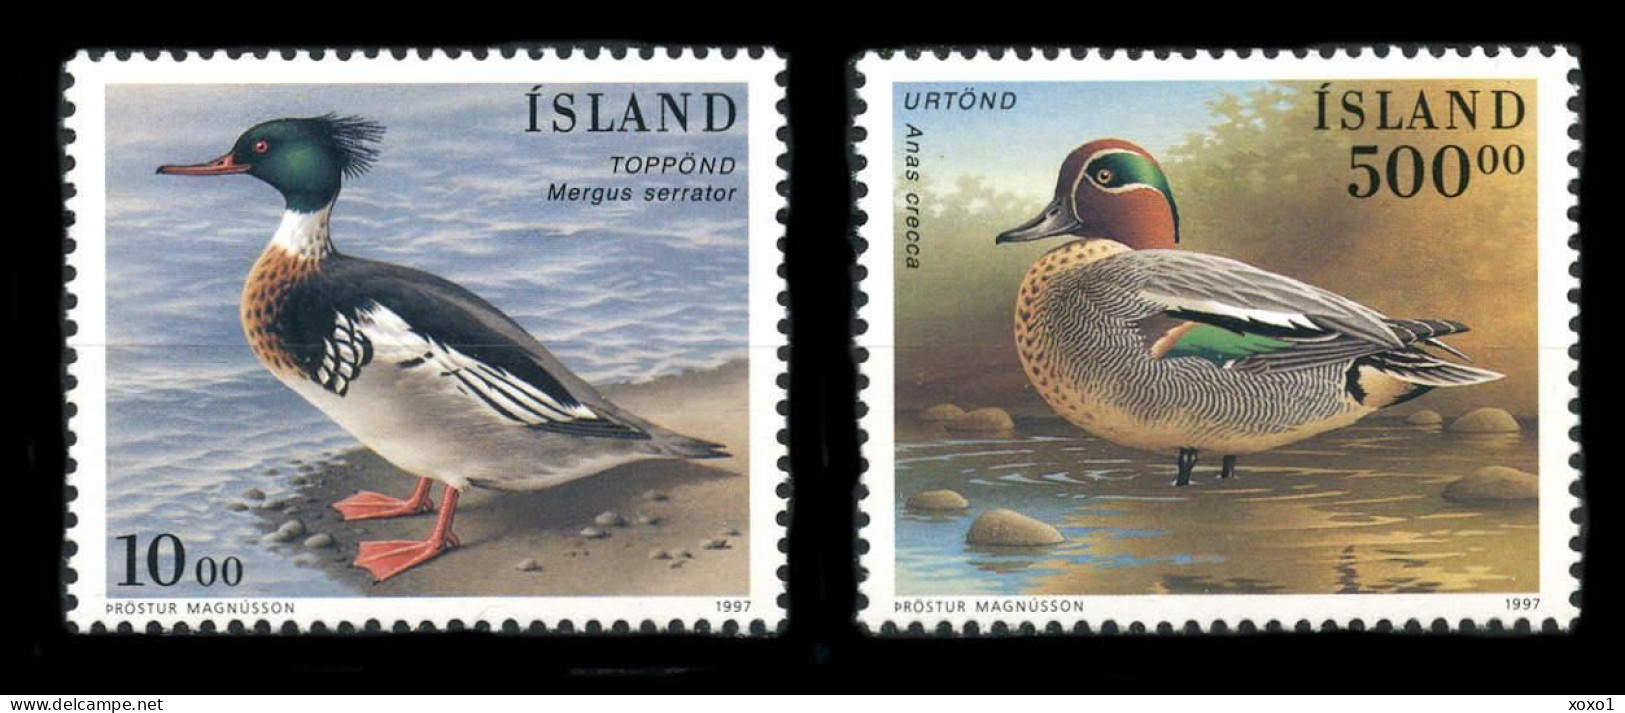 Iceland 1997 MiNr. 862 - 863 Island Birds IX  Red-breasted Merganser, Eurasian Teal 2v  MNH** 15.00 € - Canards